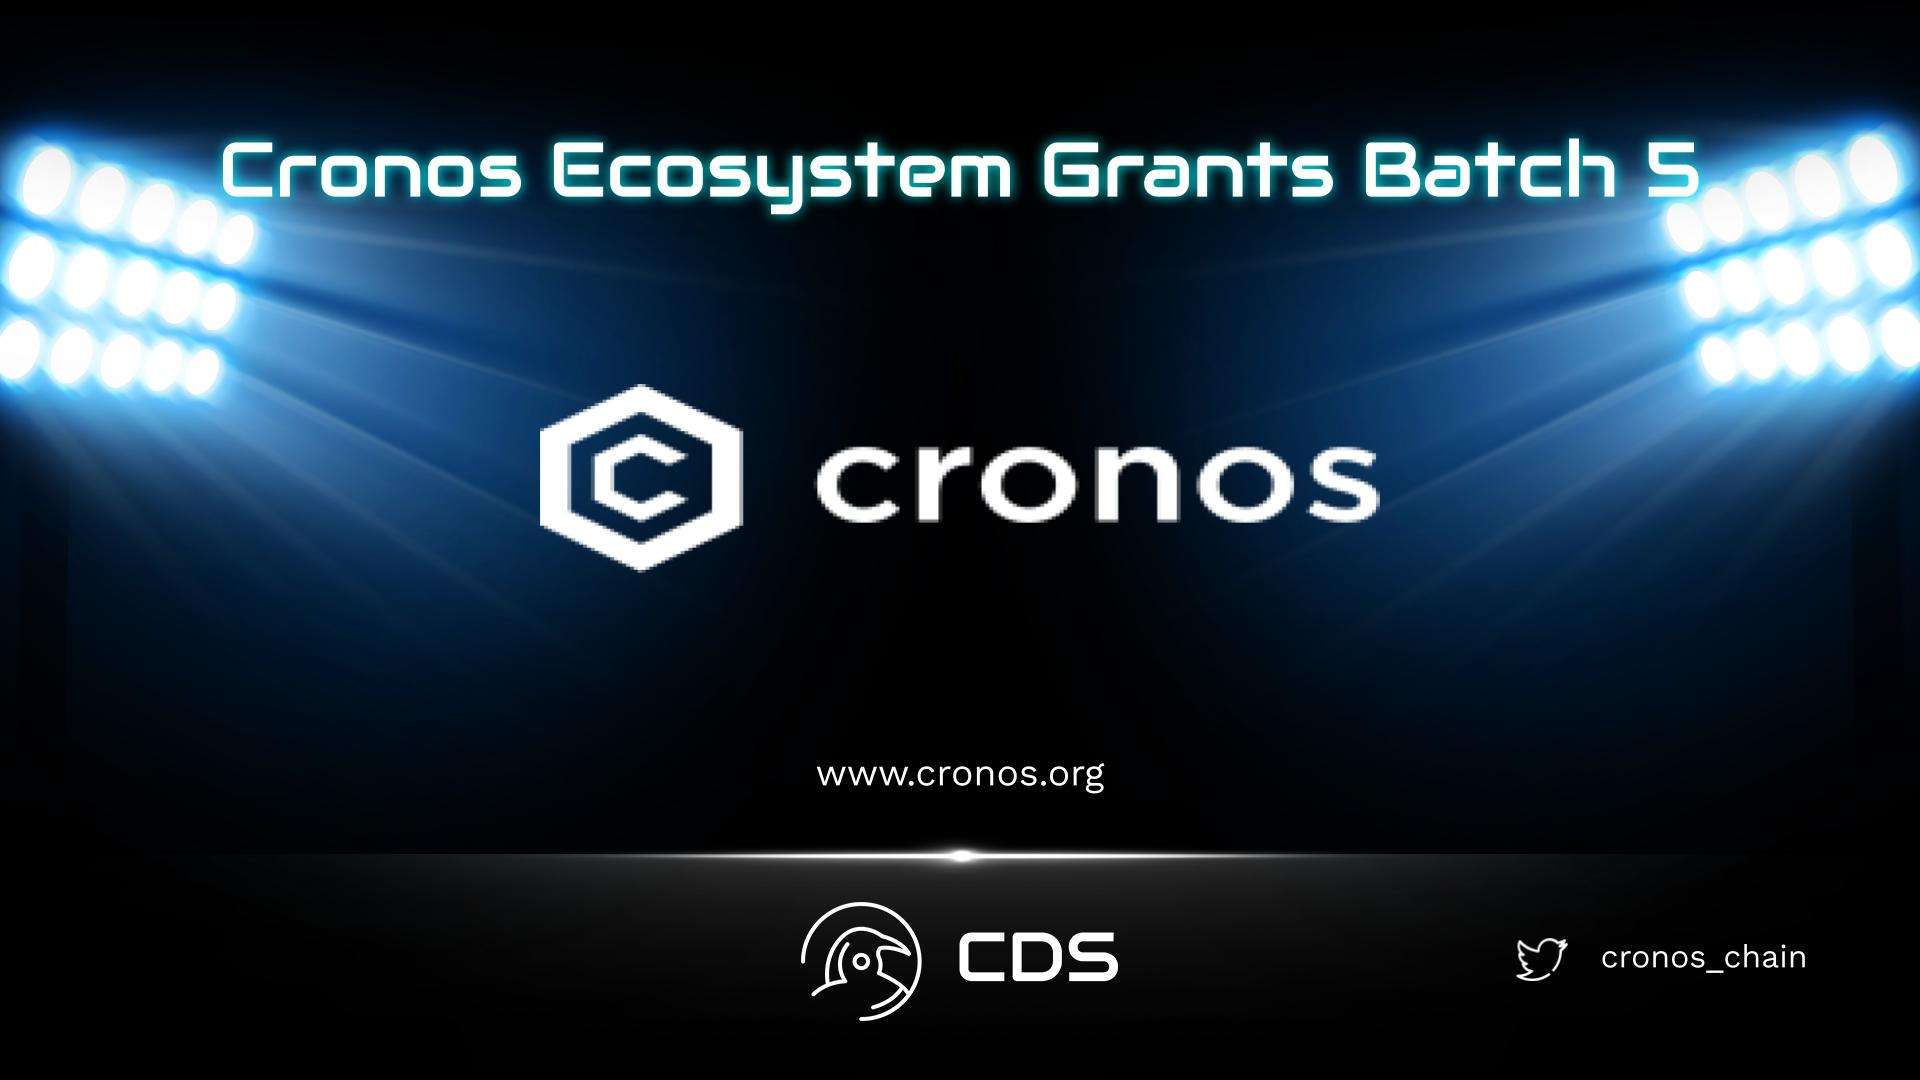 Cronos Ecosystem Grants Batch 5